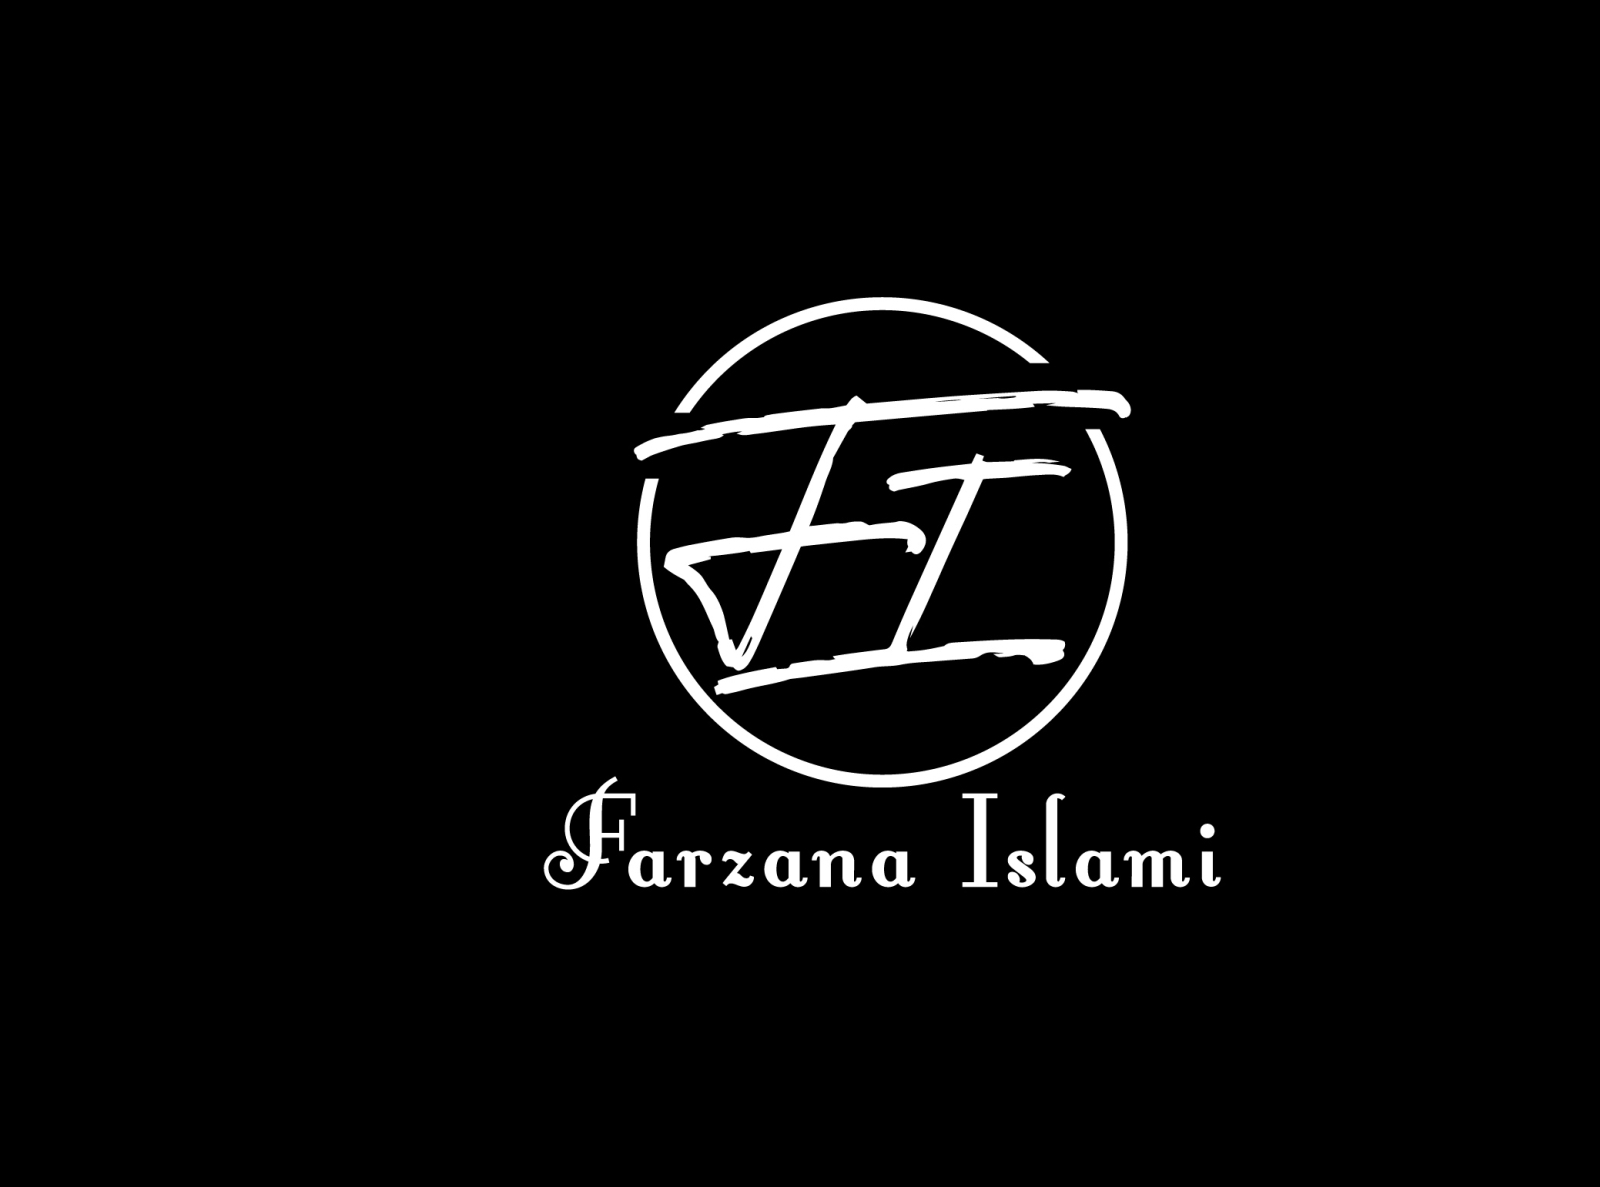 eye catching signature logo by Farjana islami on Dribbble